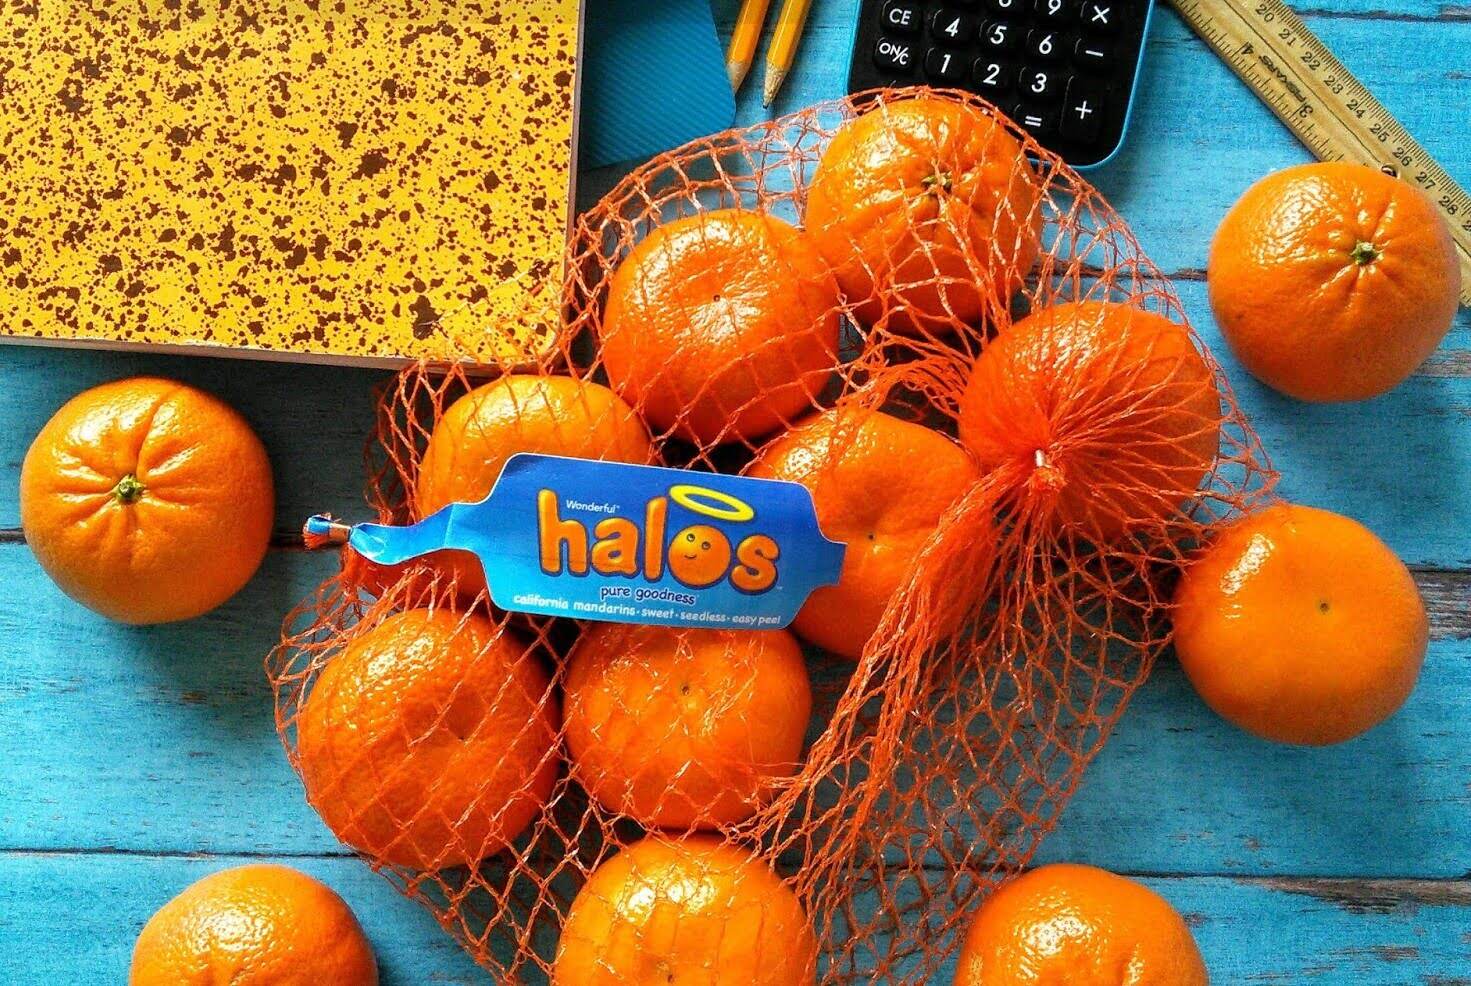 How To Store Halos Oranges